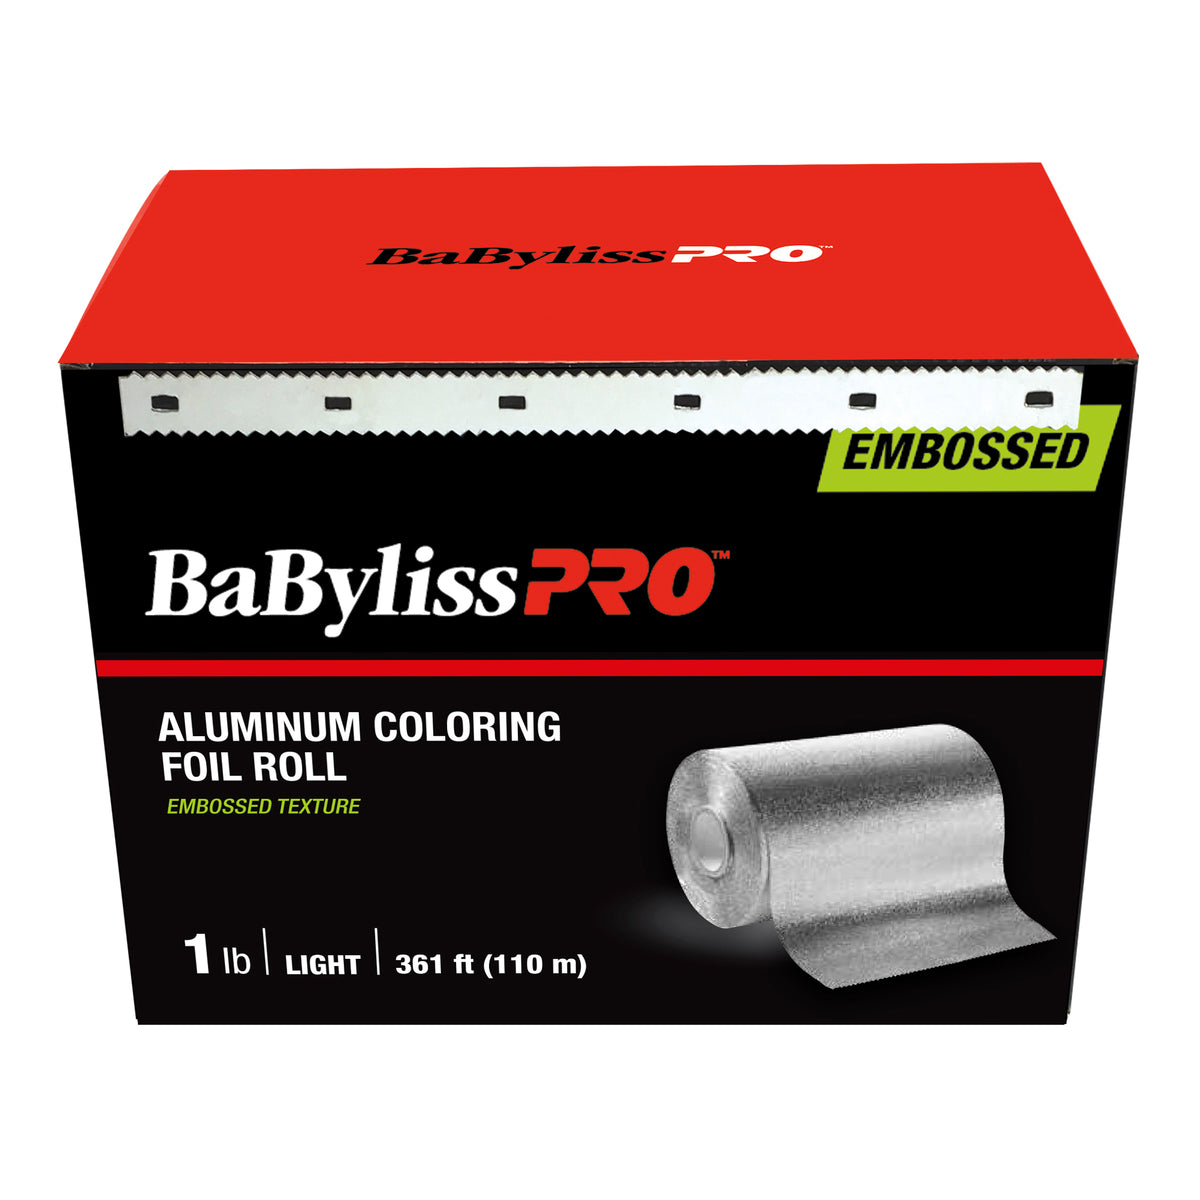 BaBylissPRO Aluminum Coloring Foil Roll, 361 Feet